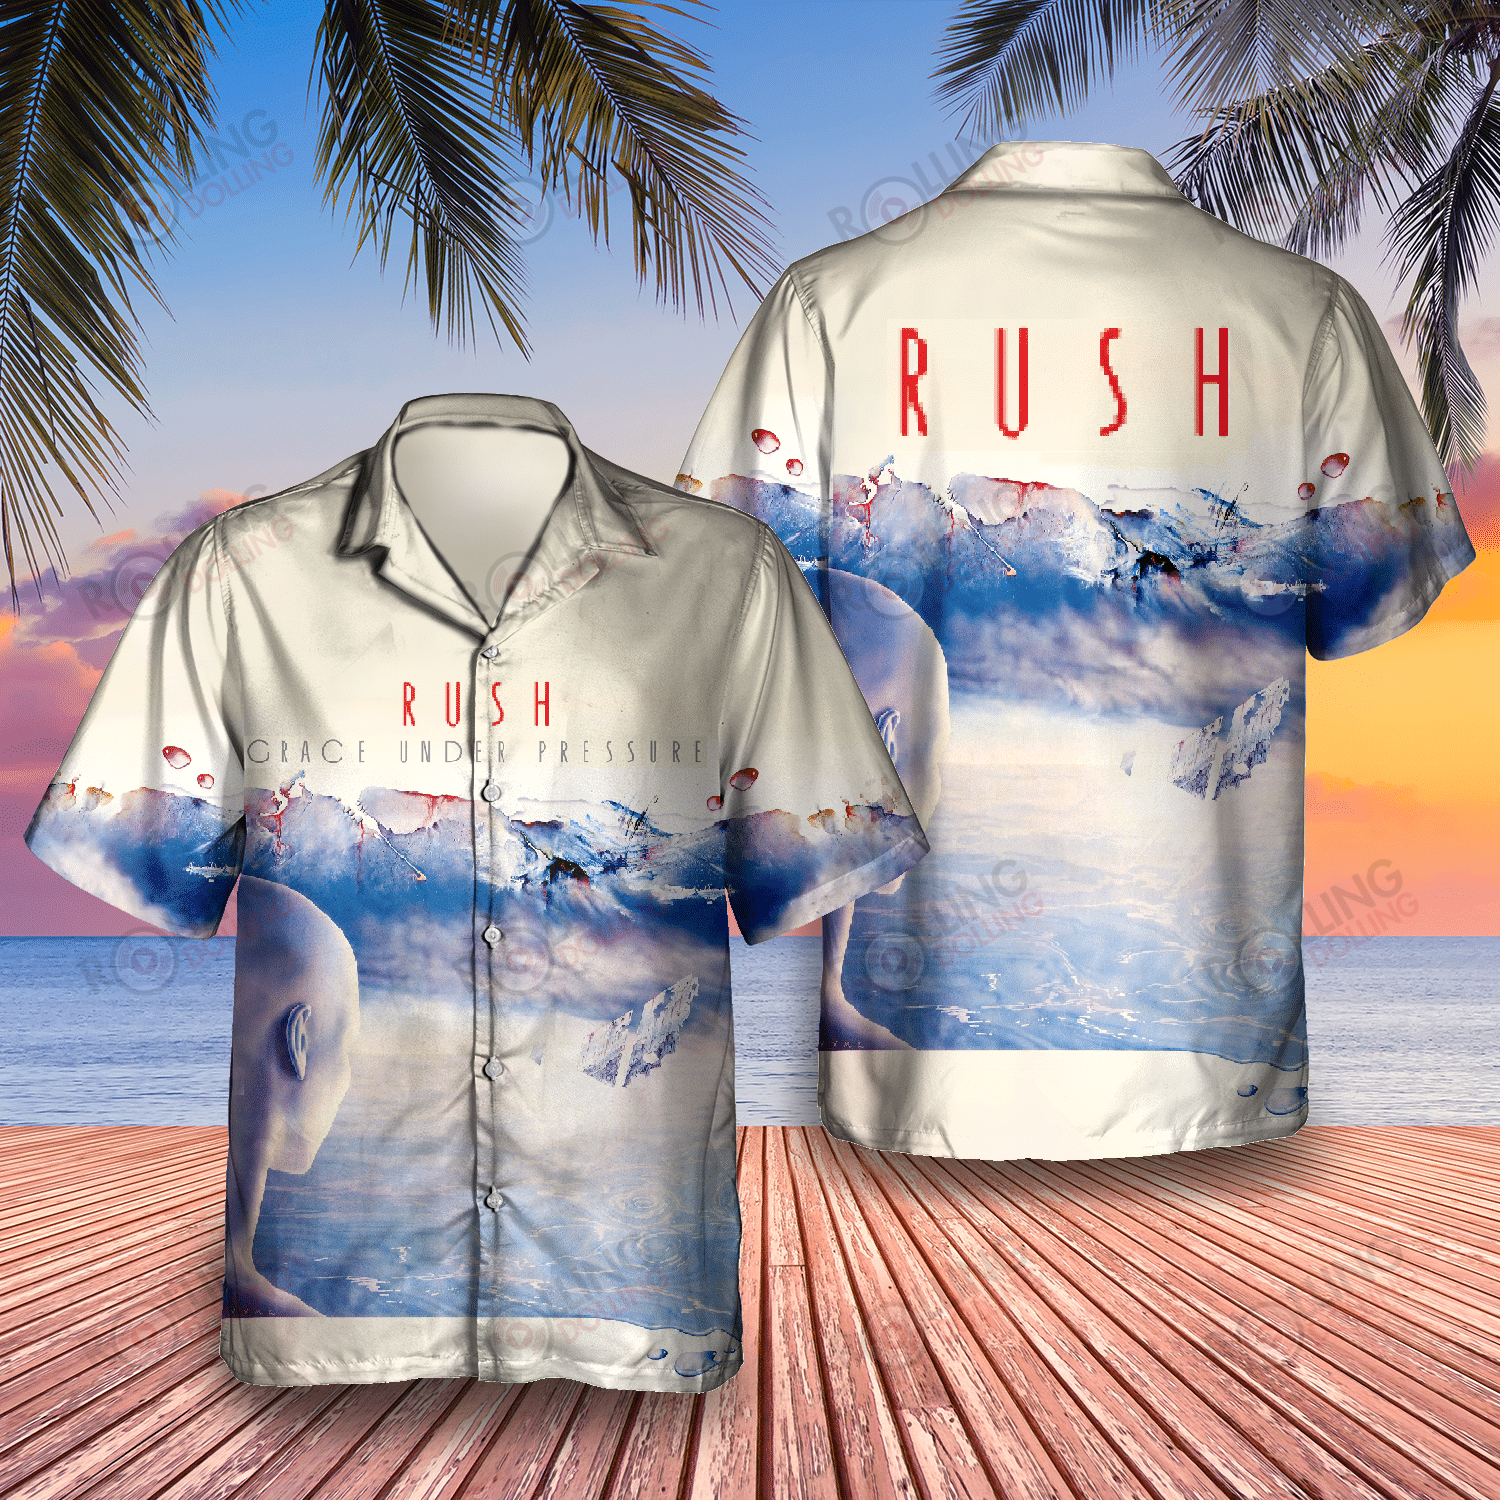 HOT Rush Grace Under Pressure Album Tropical Shirt2